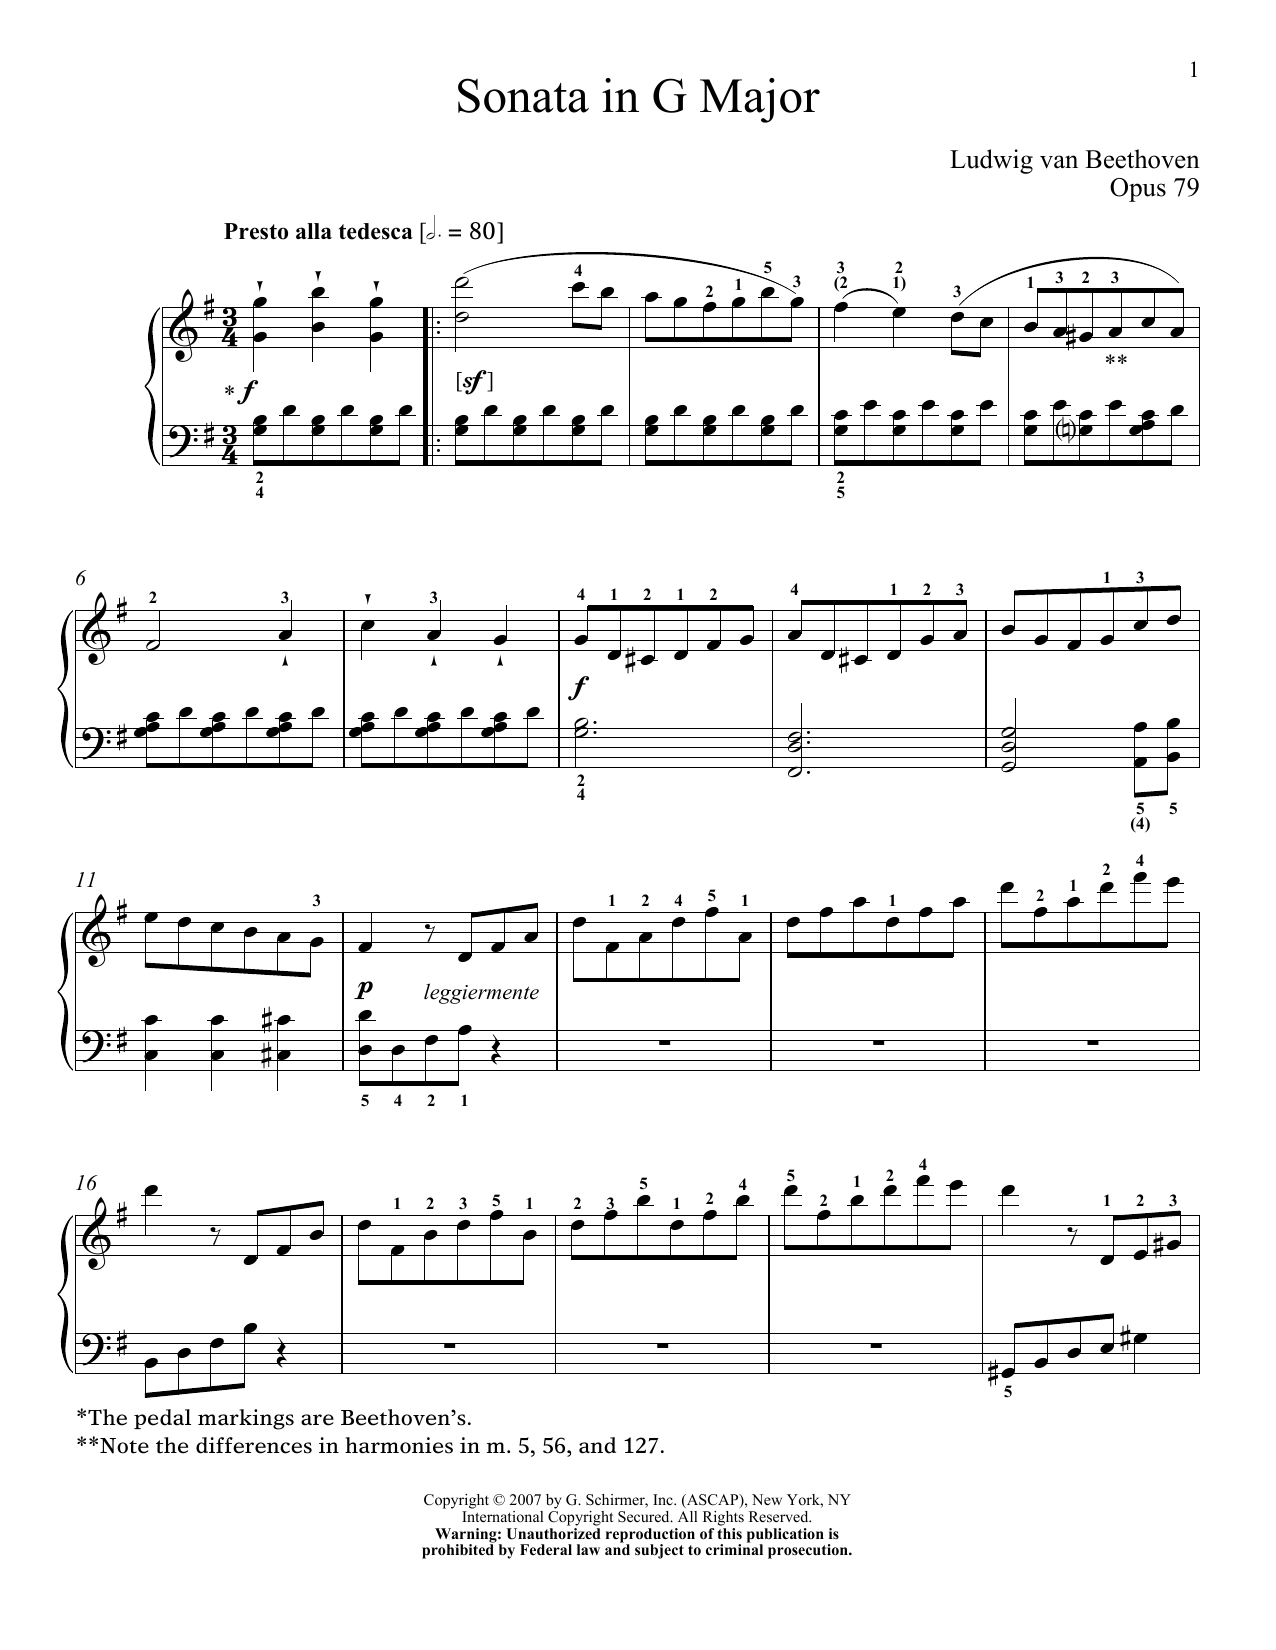 Ludwig van Beethoven Piano Sonata No. 25 In G Major, Op. 79 Sheet Music Notes & Chords for Piano - Download or Print PDF